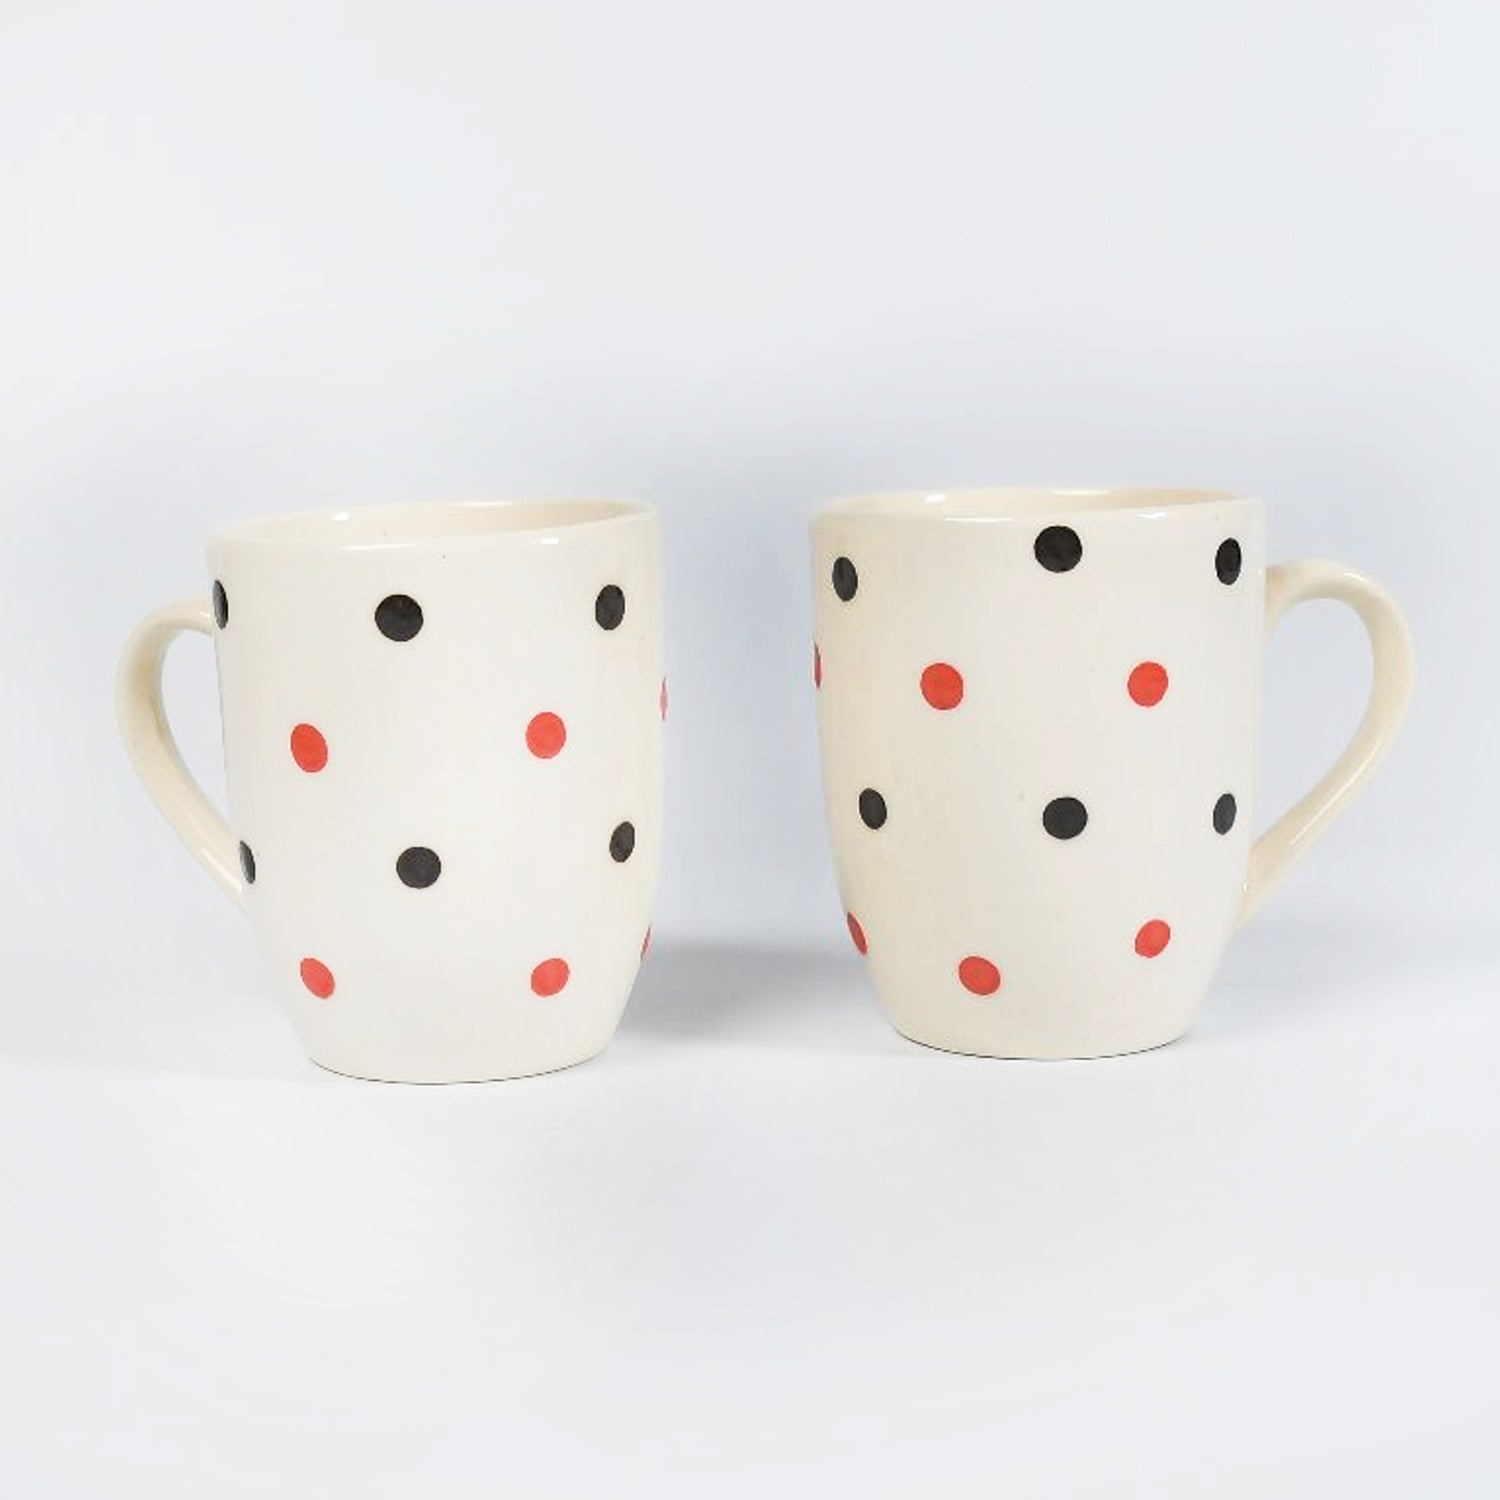 7140 Cup & Plate Set Morning Tea Serving Use Ceramic Mug Set For Home & Kitchen Use DeoDap